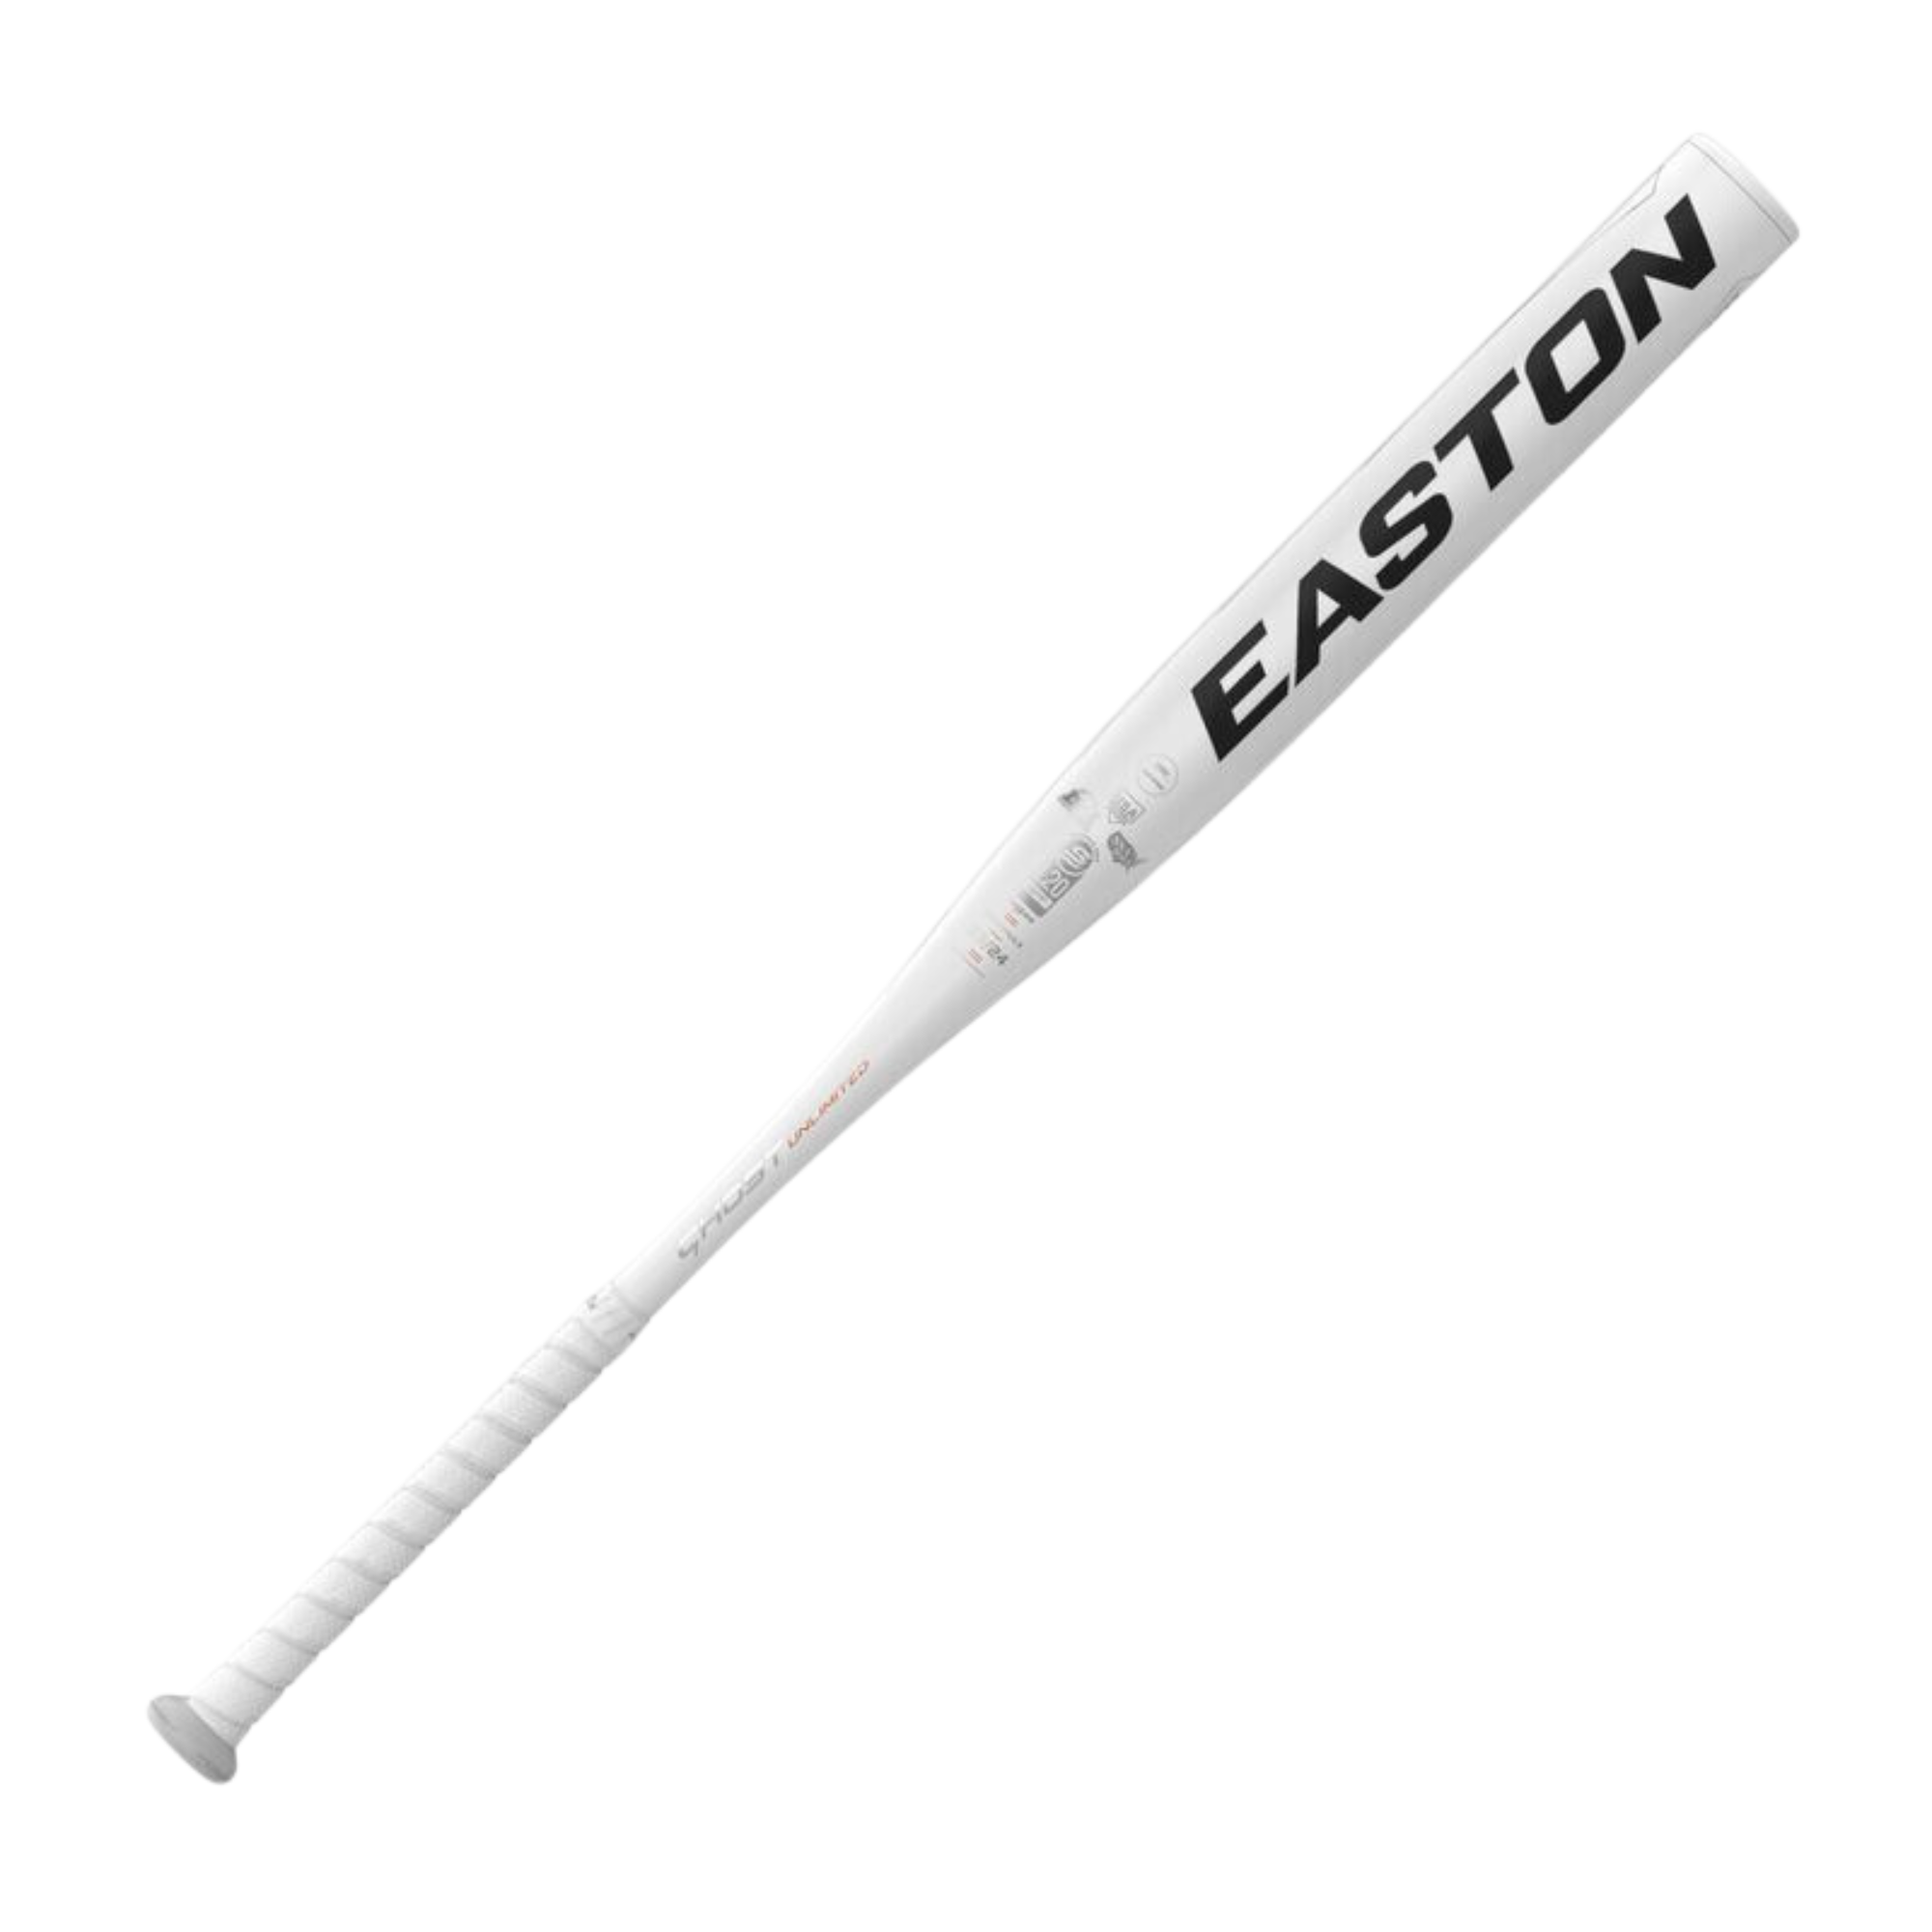 Easton Ghost Unlimited -9 Fastpitch Softball Bat